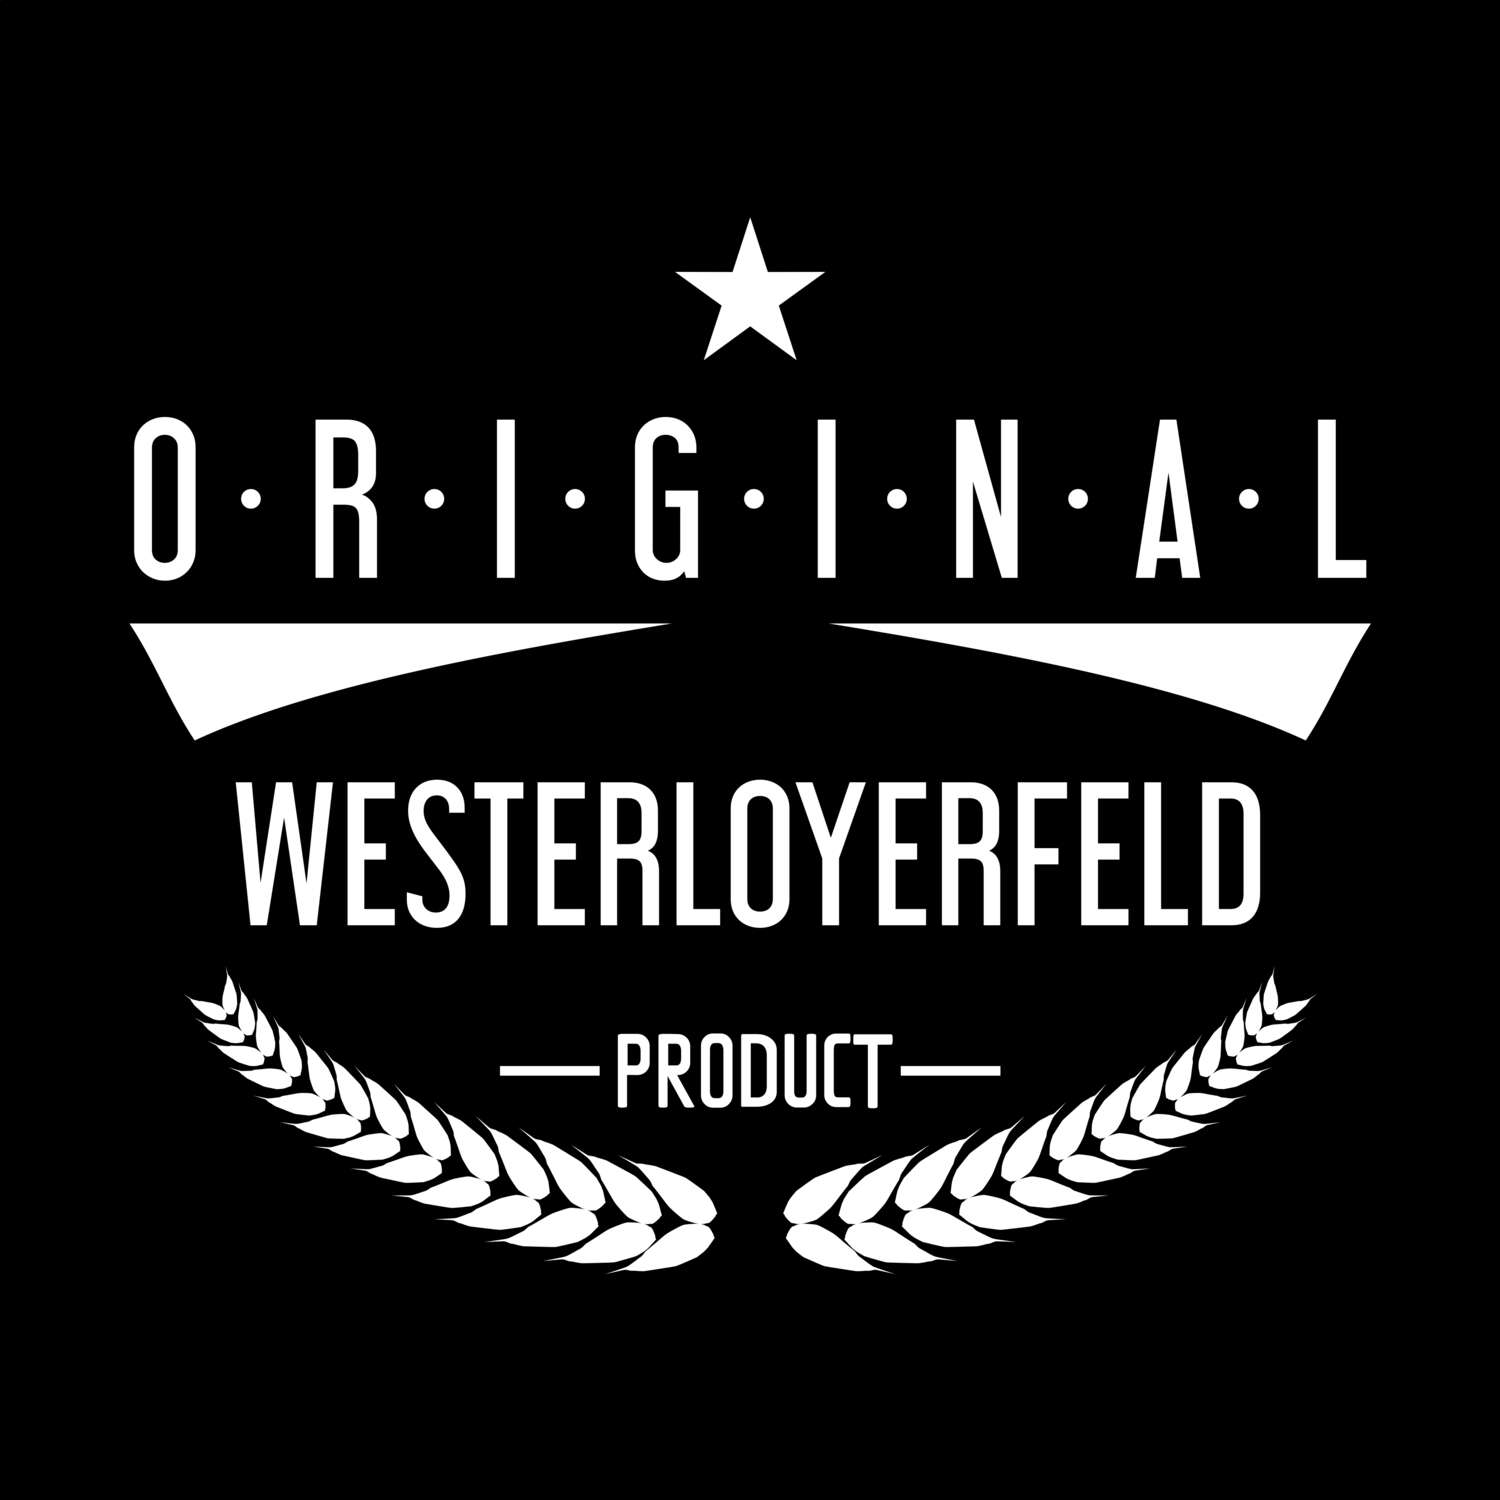 Westerloyerfeld T-Shirt »Original Product«